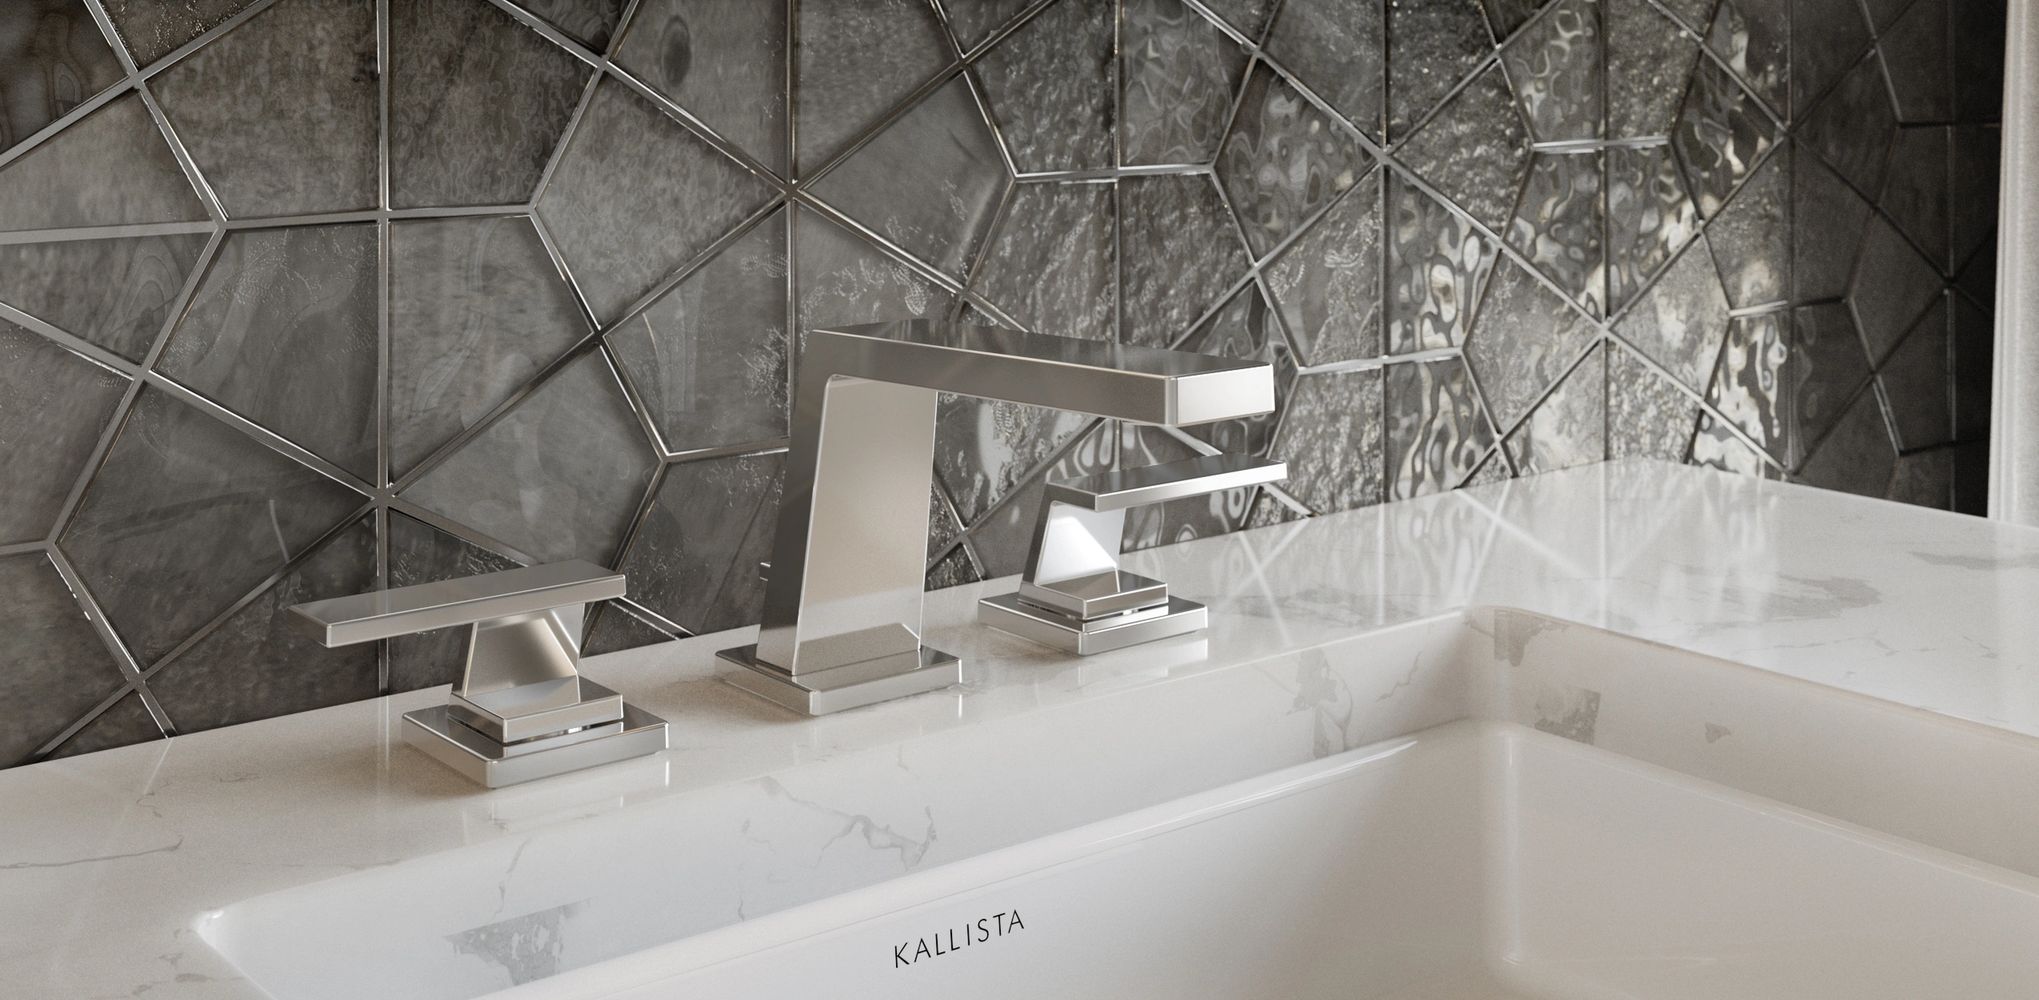 Kohler Kallista bathroom rendering featuring a 3D rendered faucet in brushed chrome